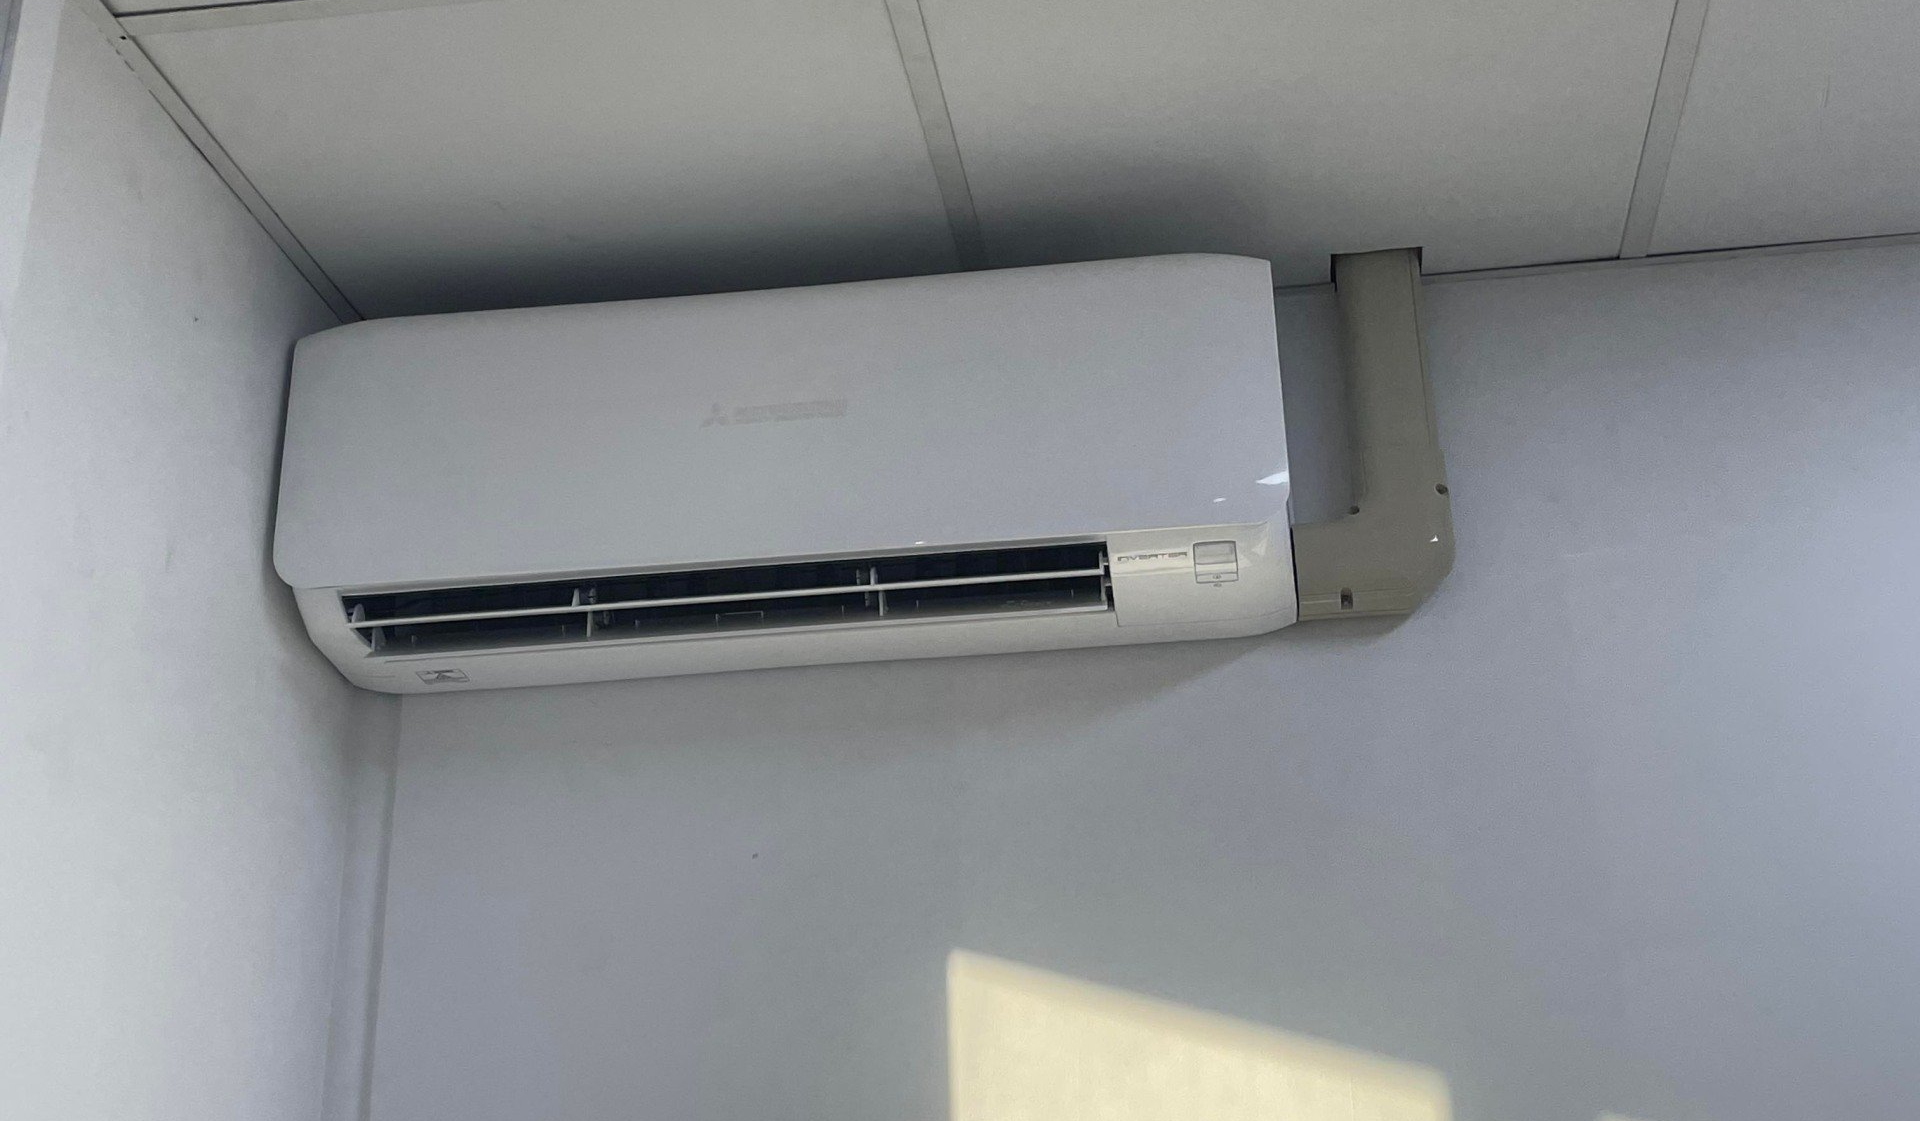 Indoor Split System Air Conditioning Unit Installed in Bedroom